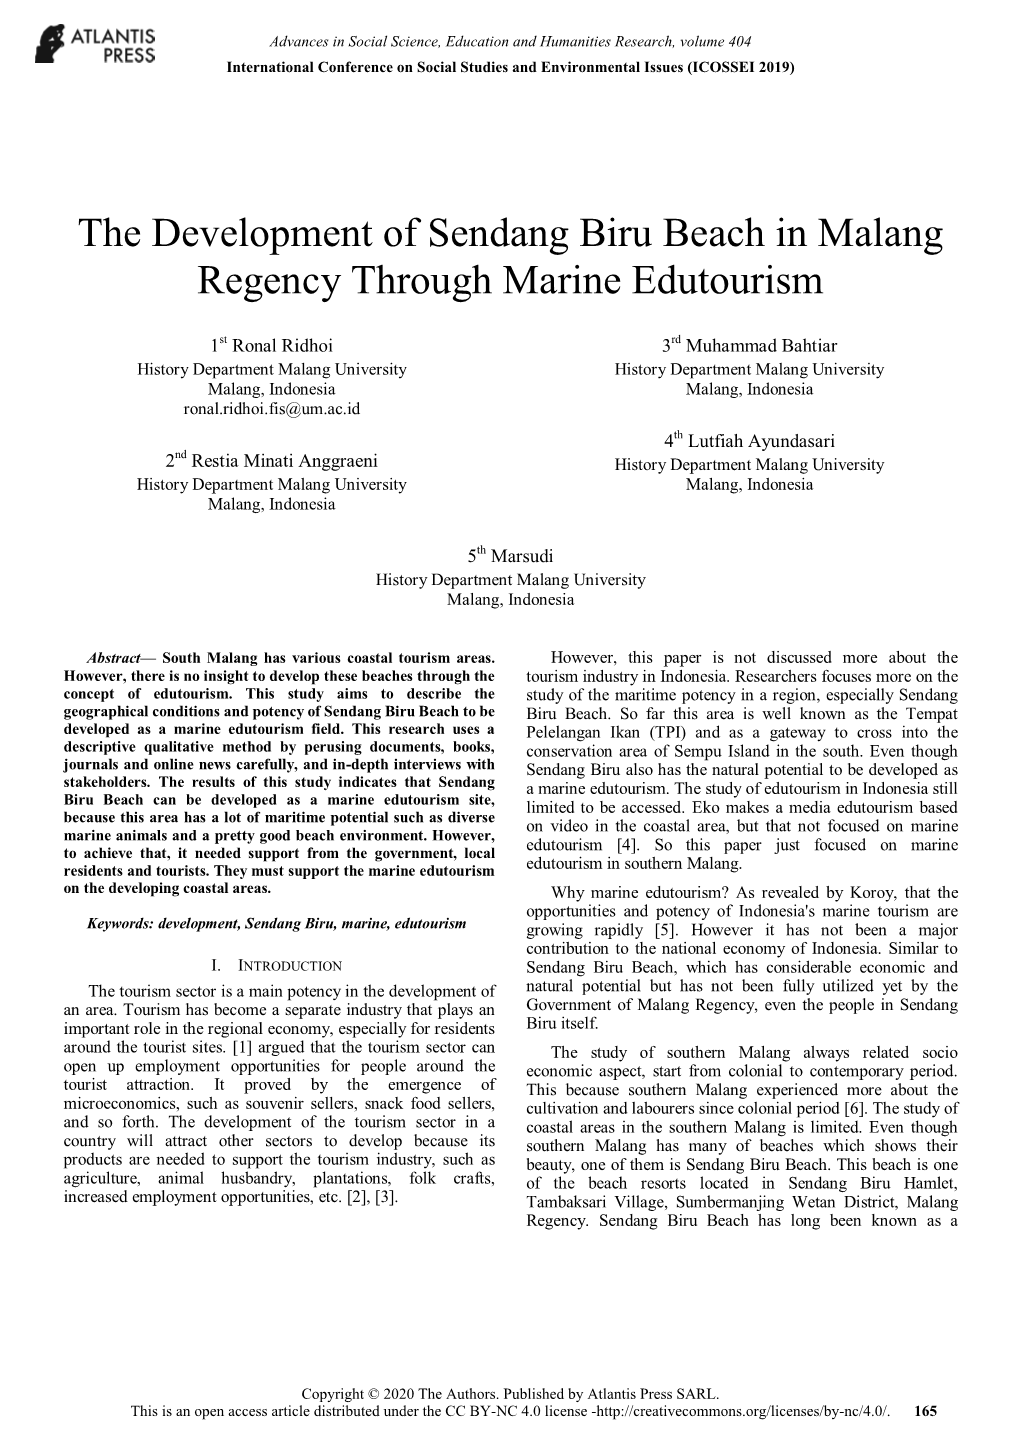 The Development of Sendang Biru Beach in Malang Regency Through